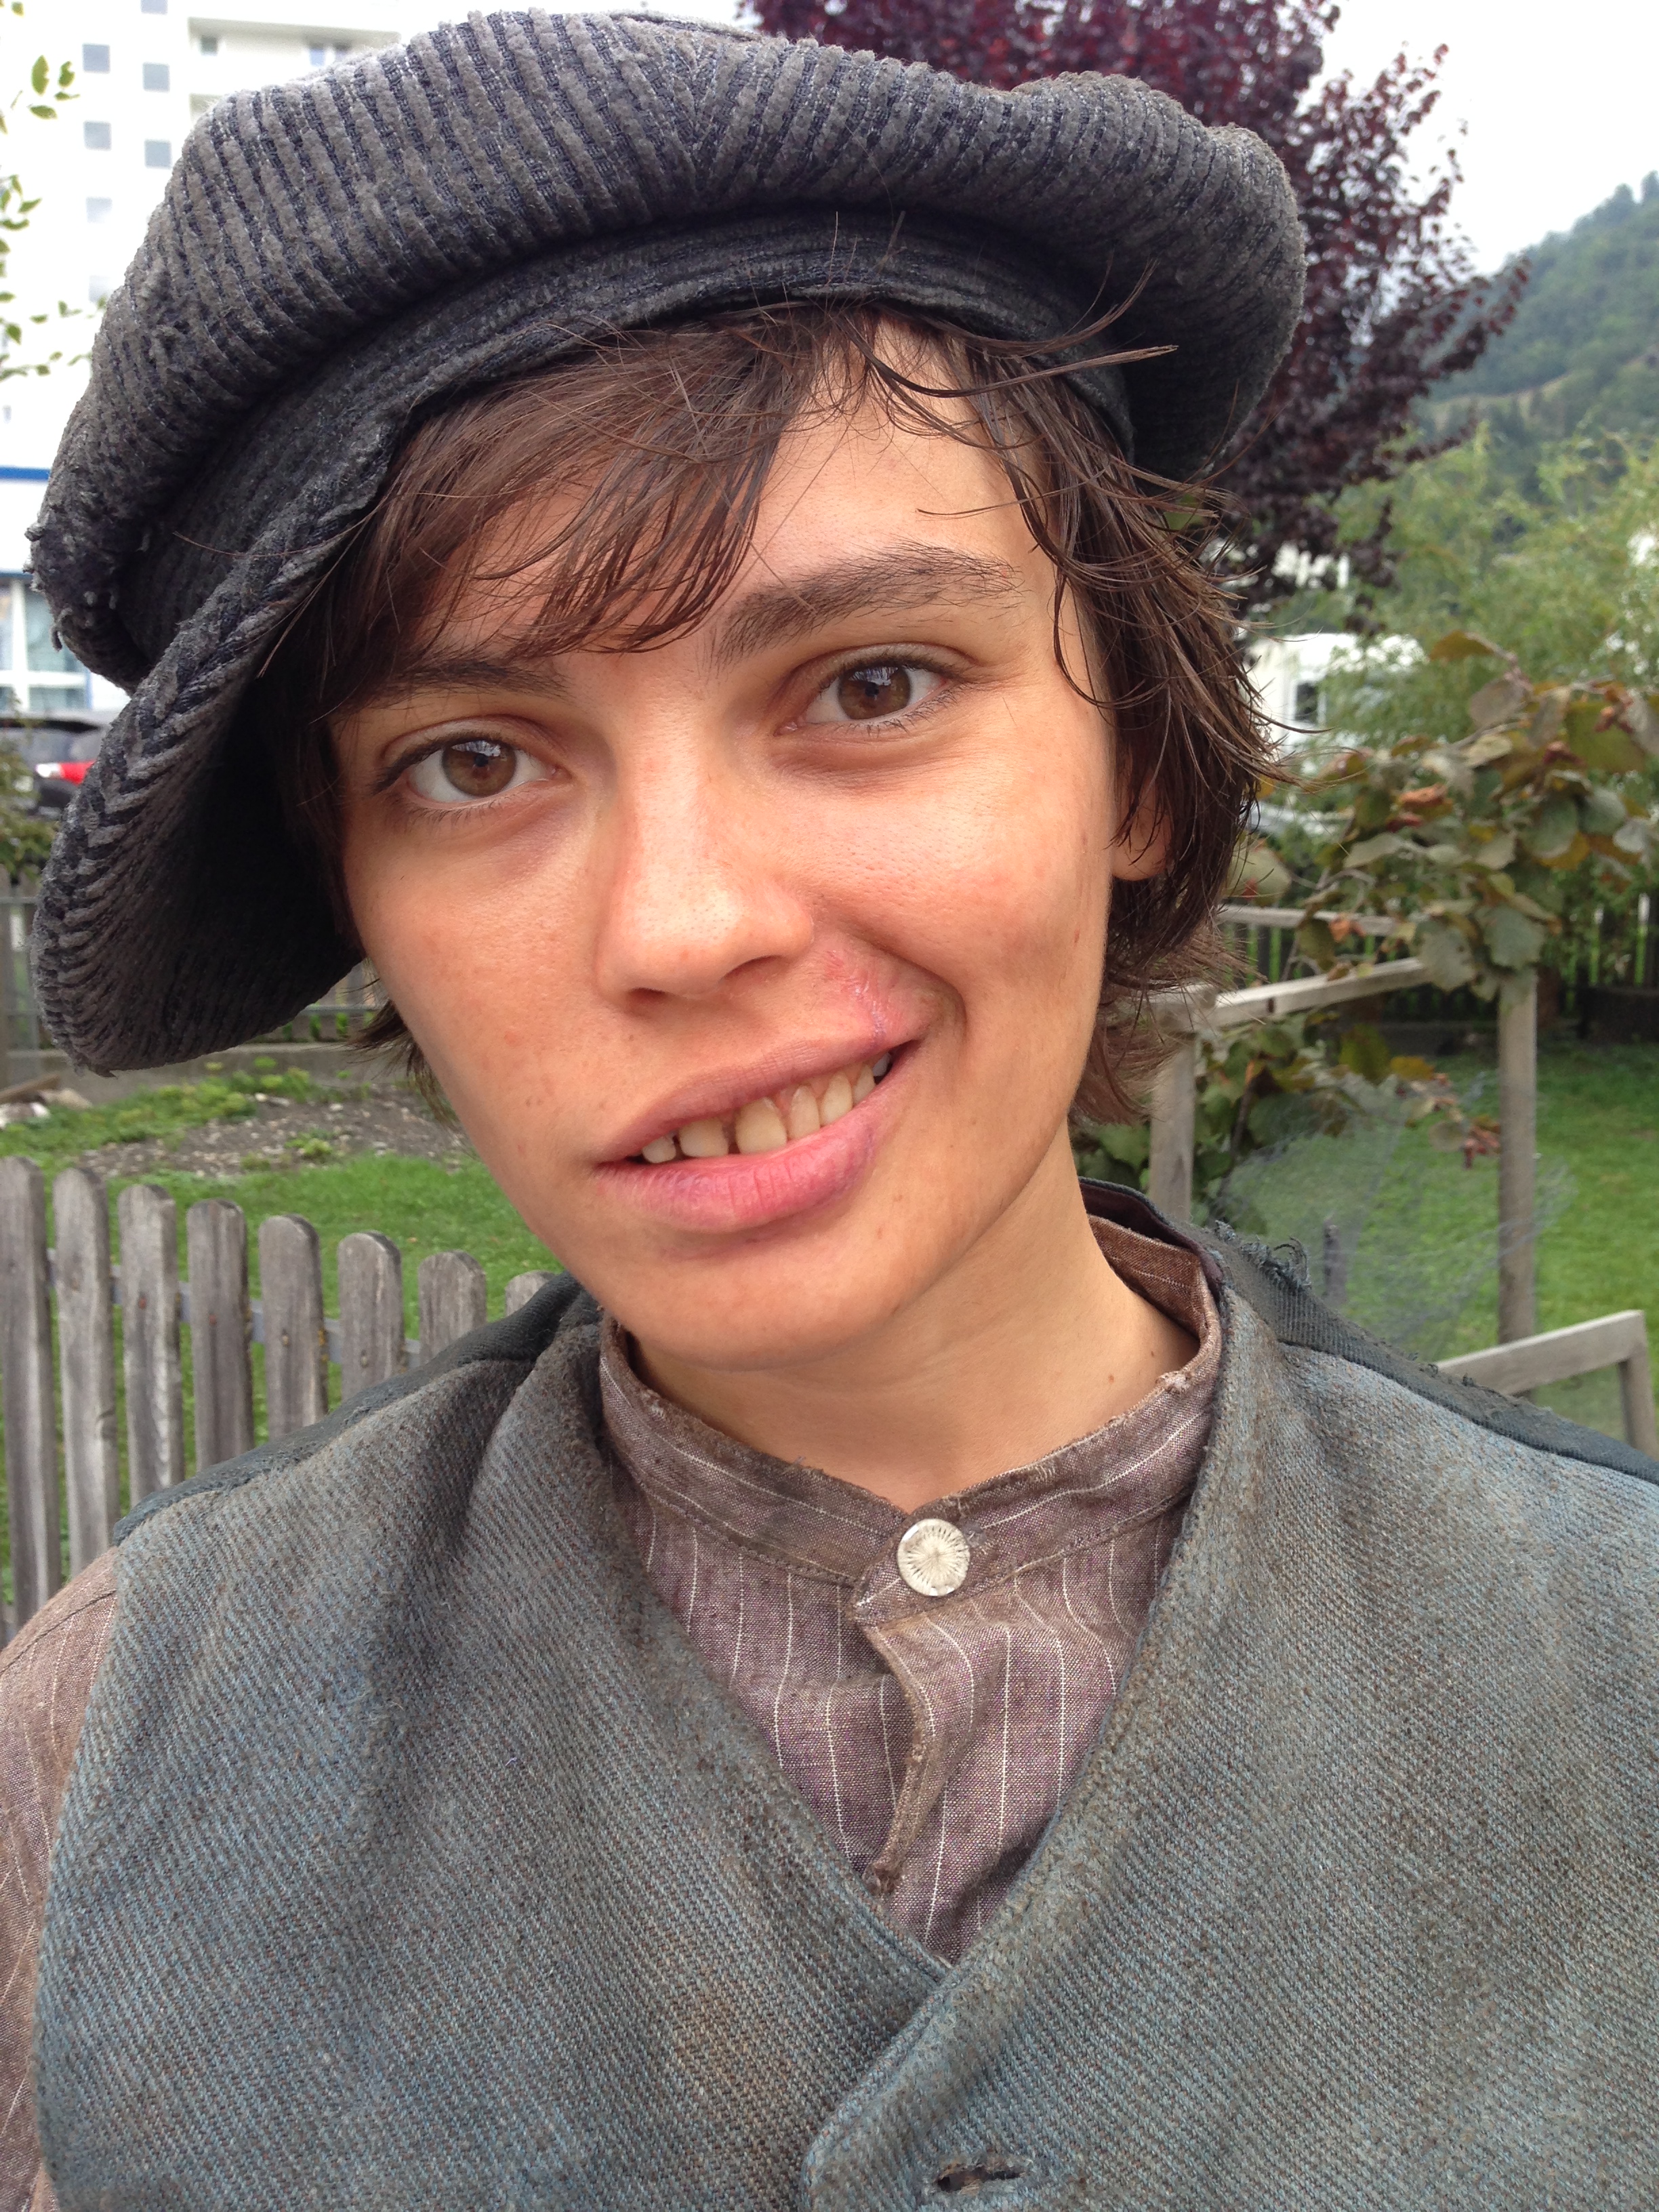 Still of Silvia Busuioc as Leo for Gotthard film.